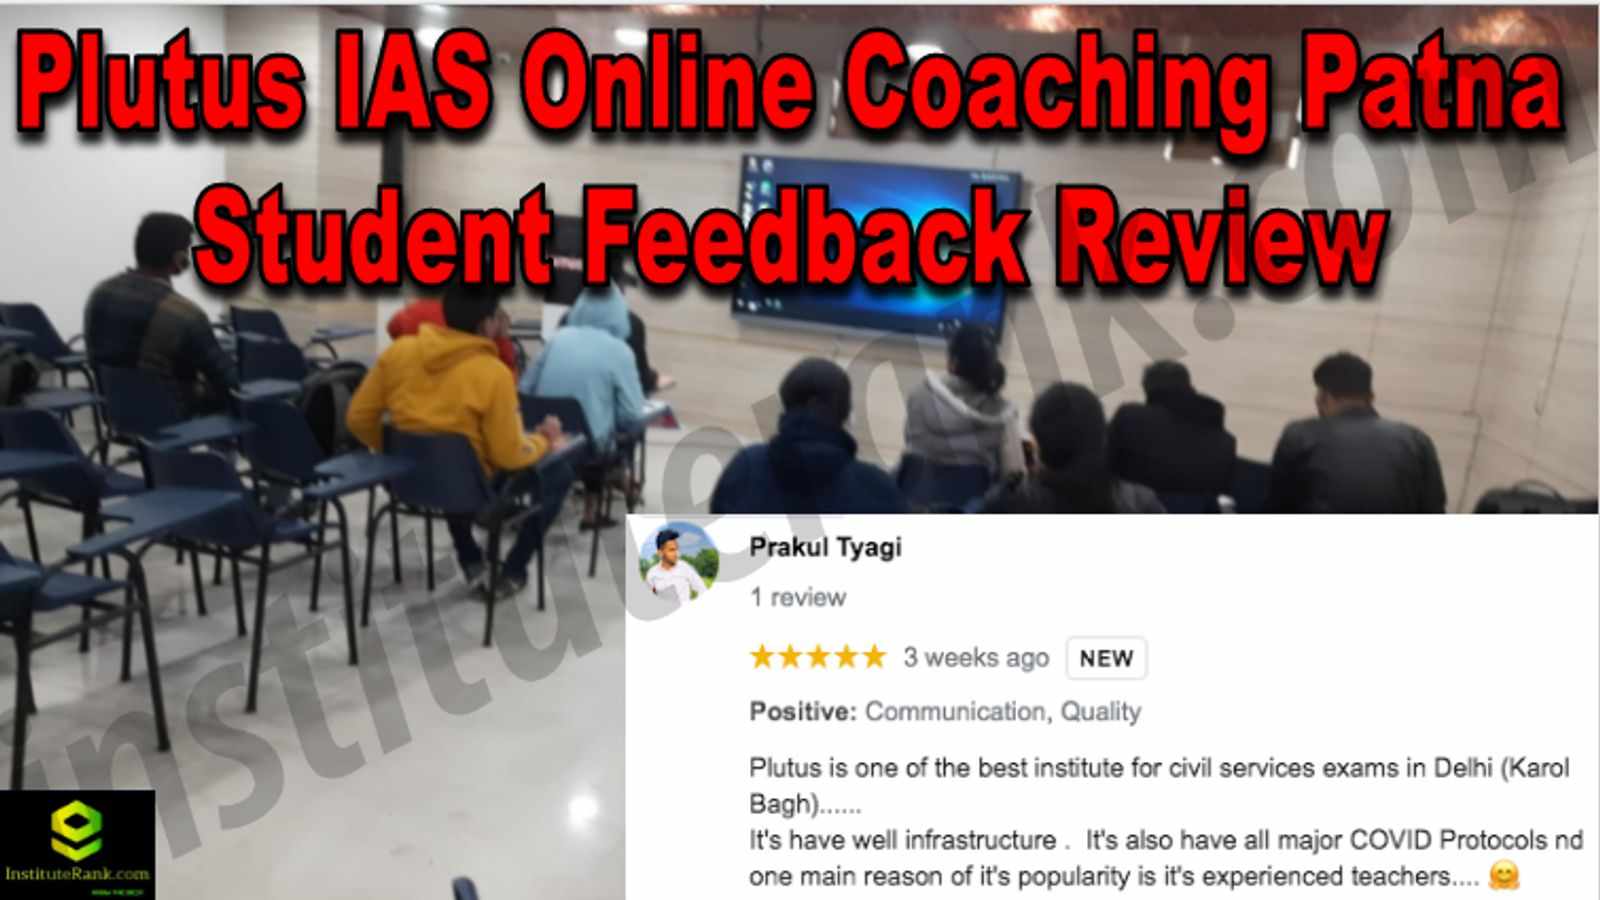 Plutus IAS Online Coaching Patna Student Feedback Reviews